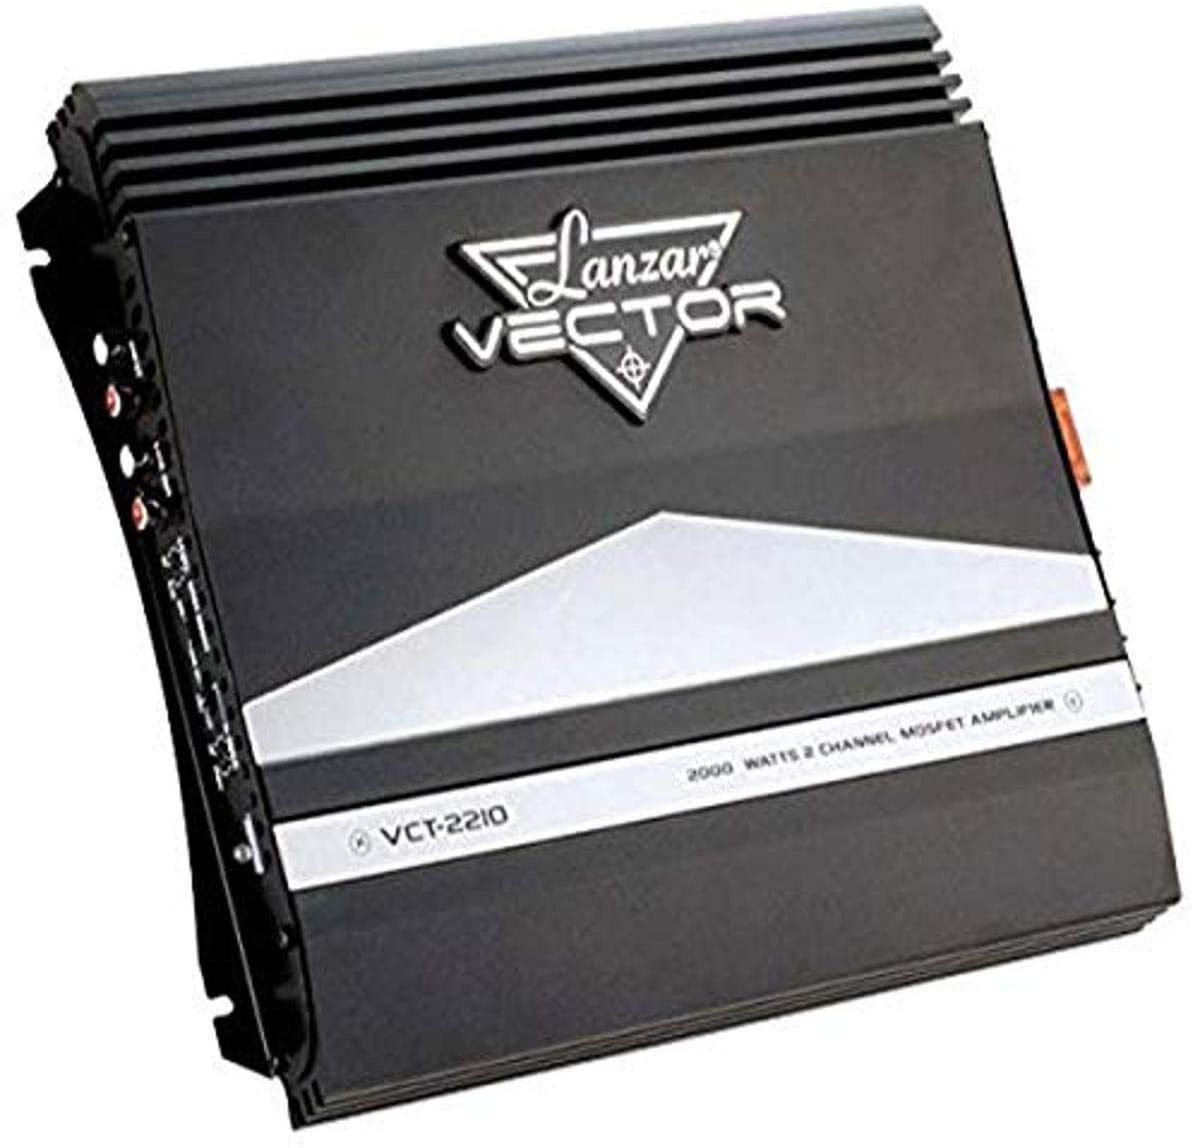 MOSFET High Power Amplifier Best 4 Channel Amplifiers Under $200